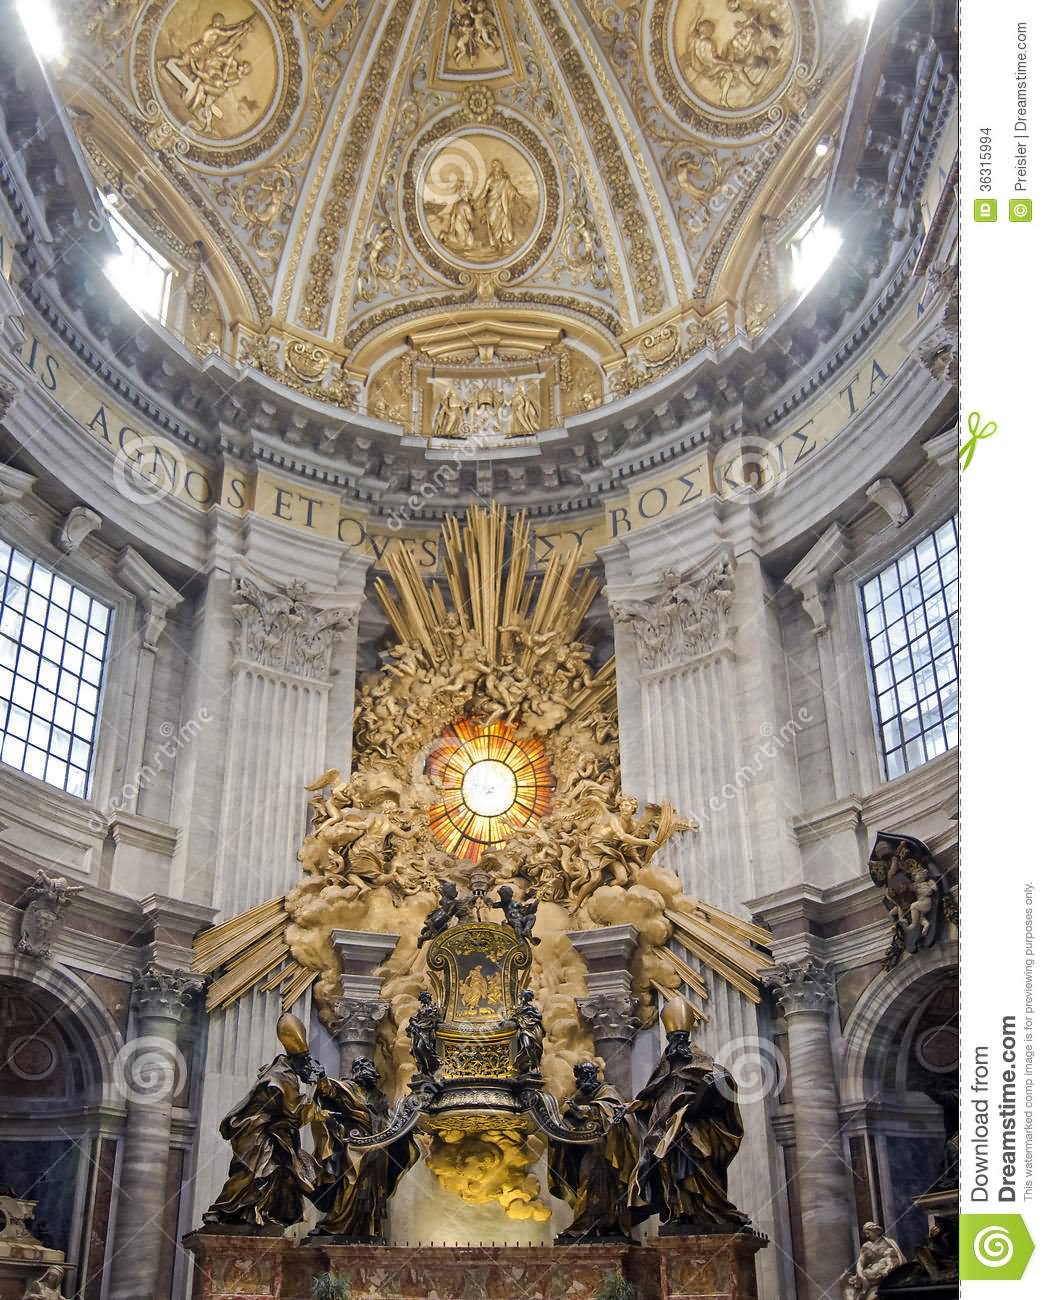 Incredible Sculptures Inside St. Peter's Basilica, Vatican City